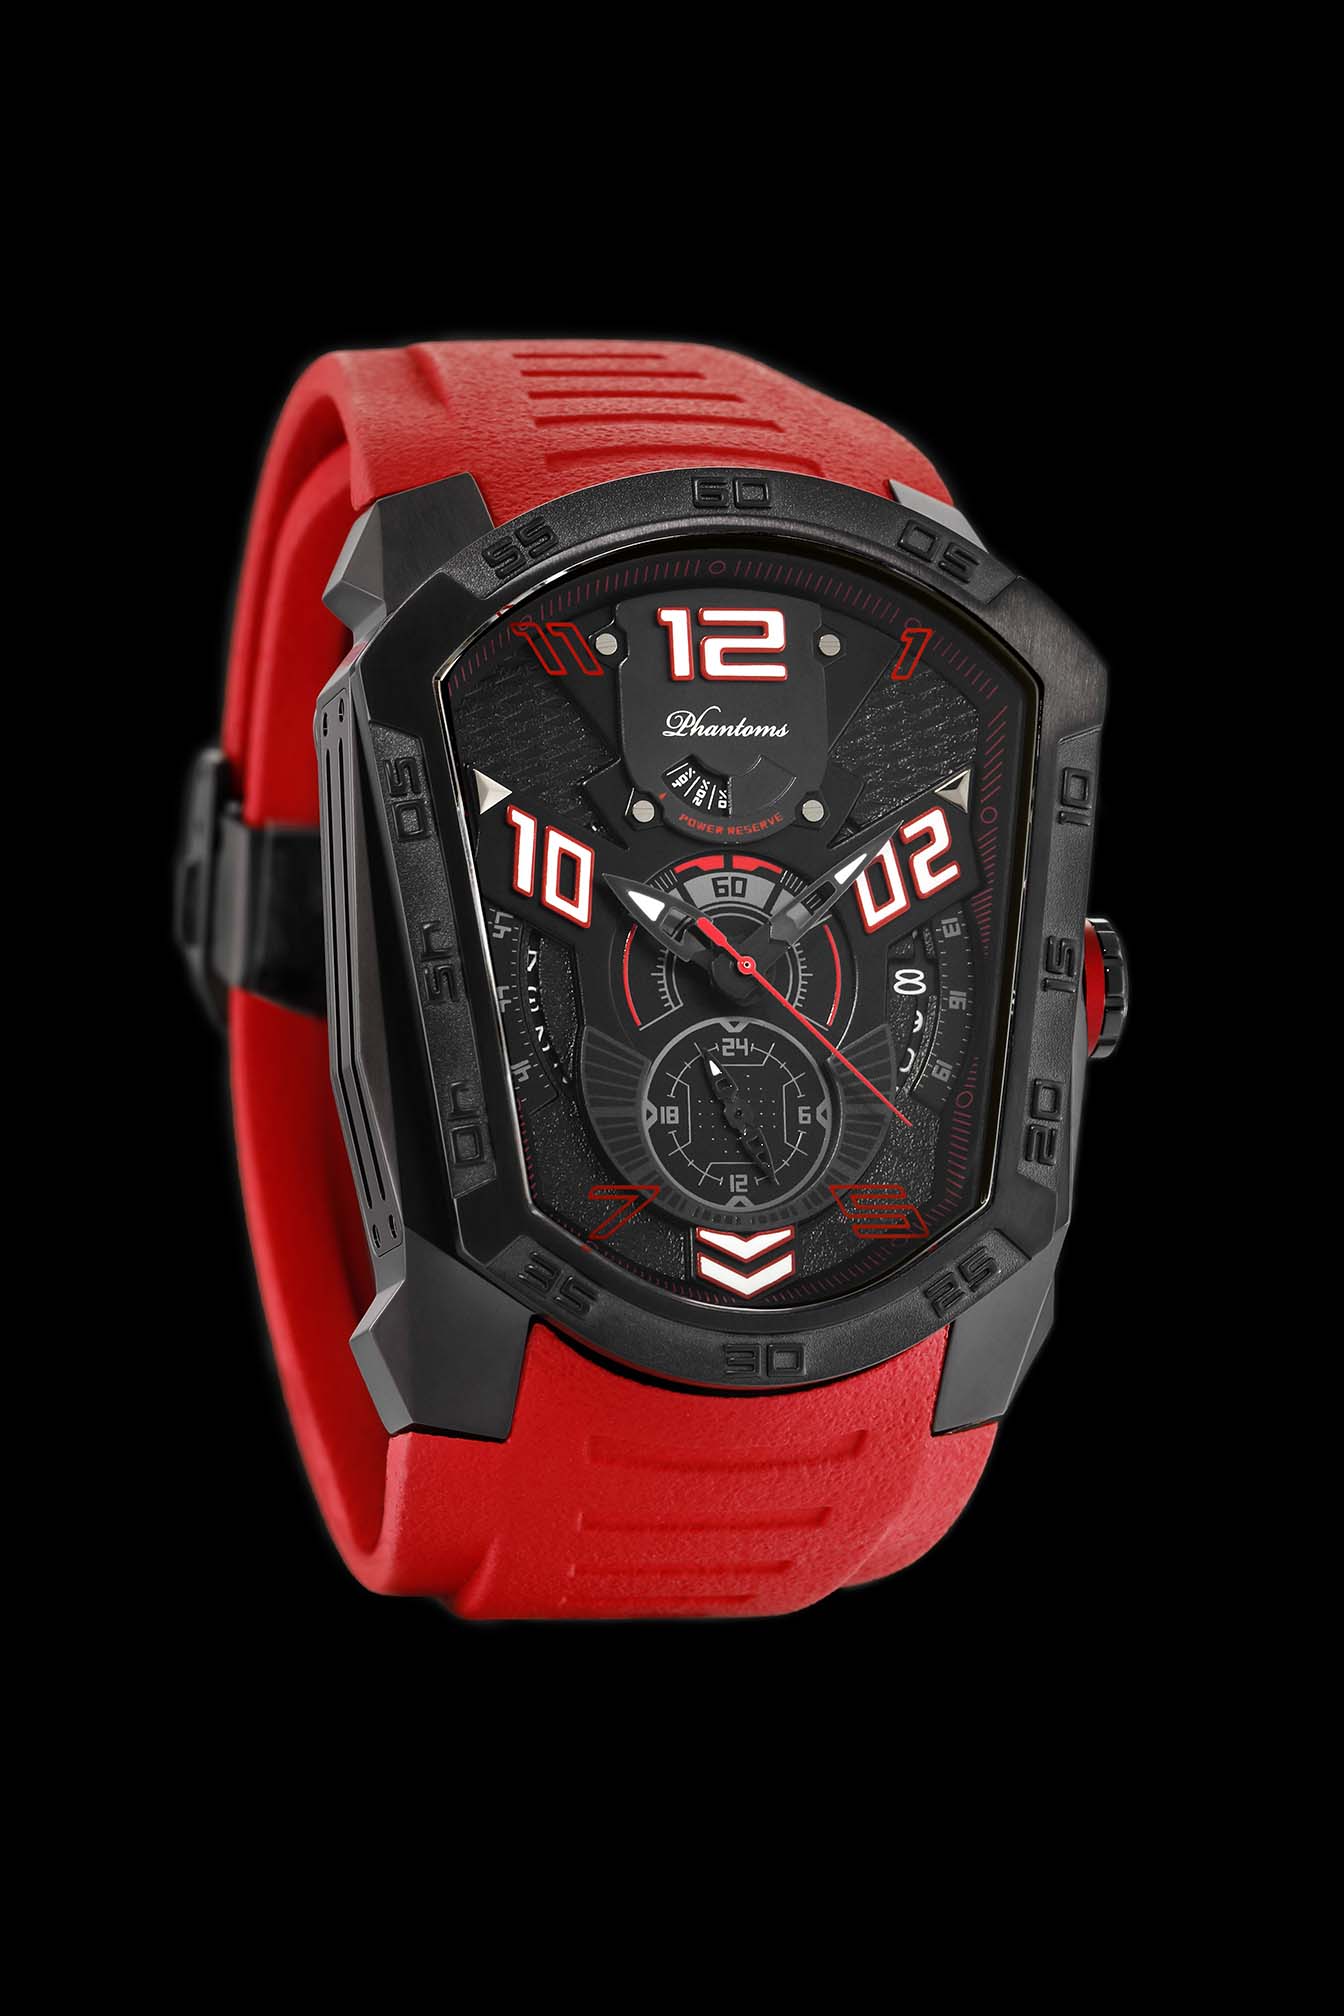 Flaming Laser Series Japanese Miyota Automatic Watch, Phantoms Watch Tourbillon, Sporty Mechanical Watch For Men